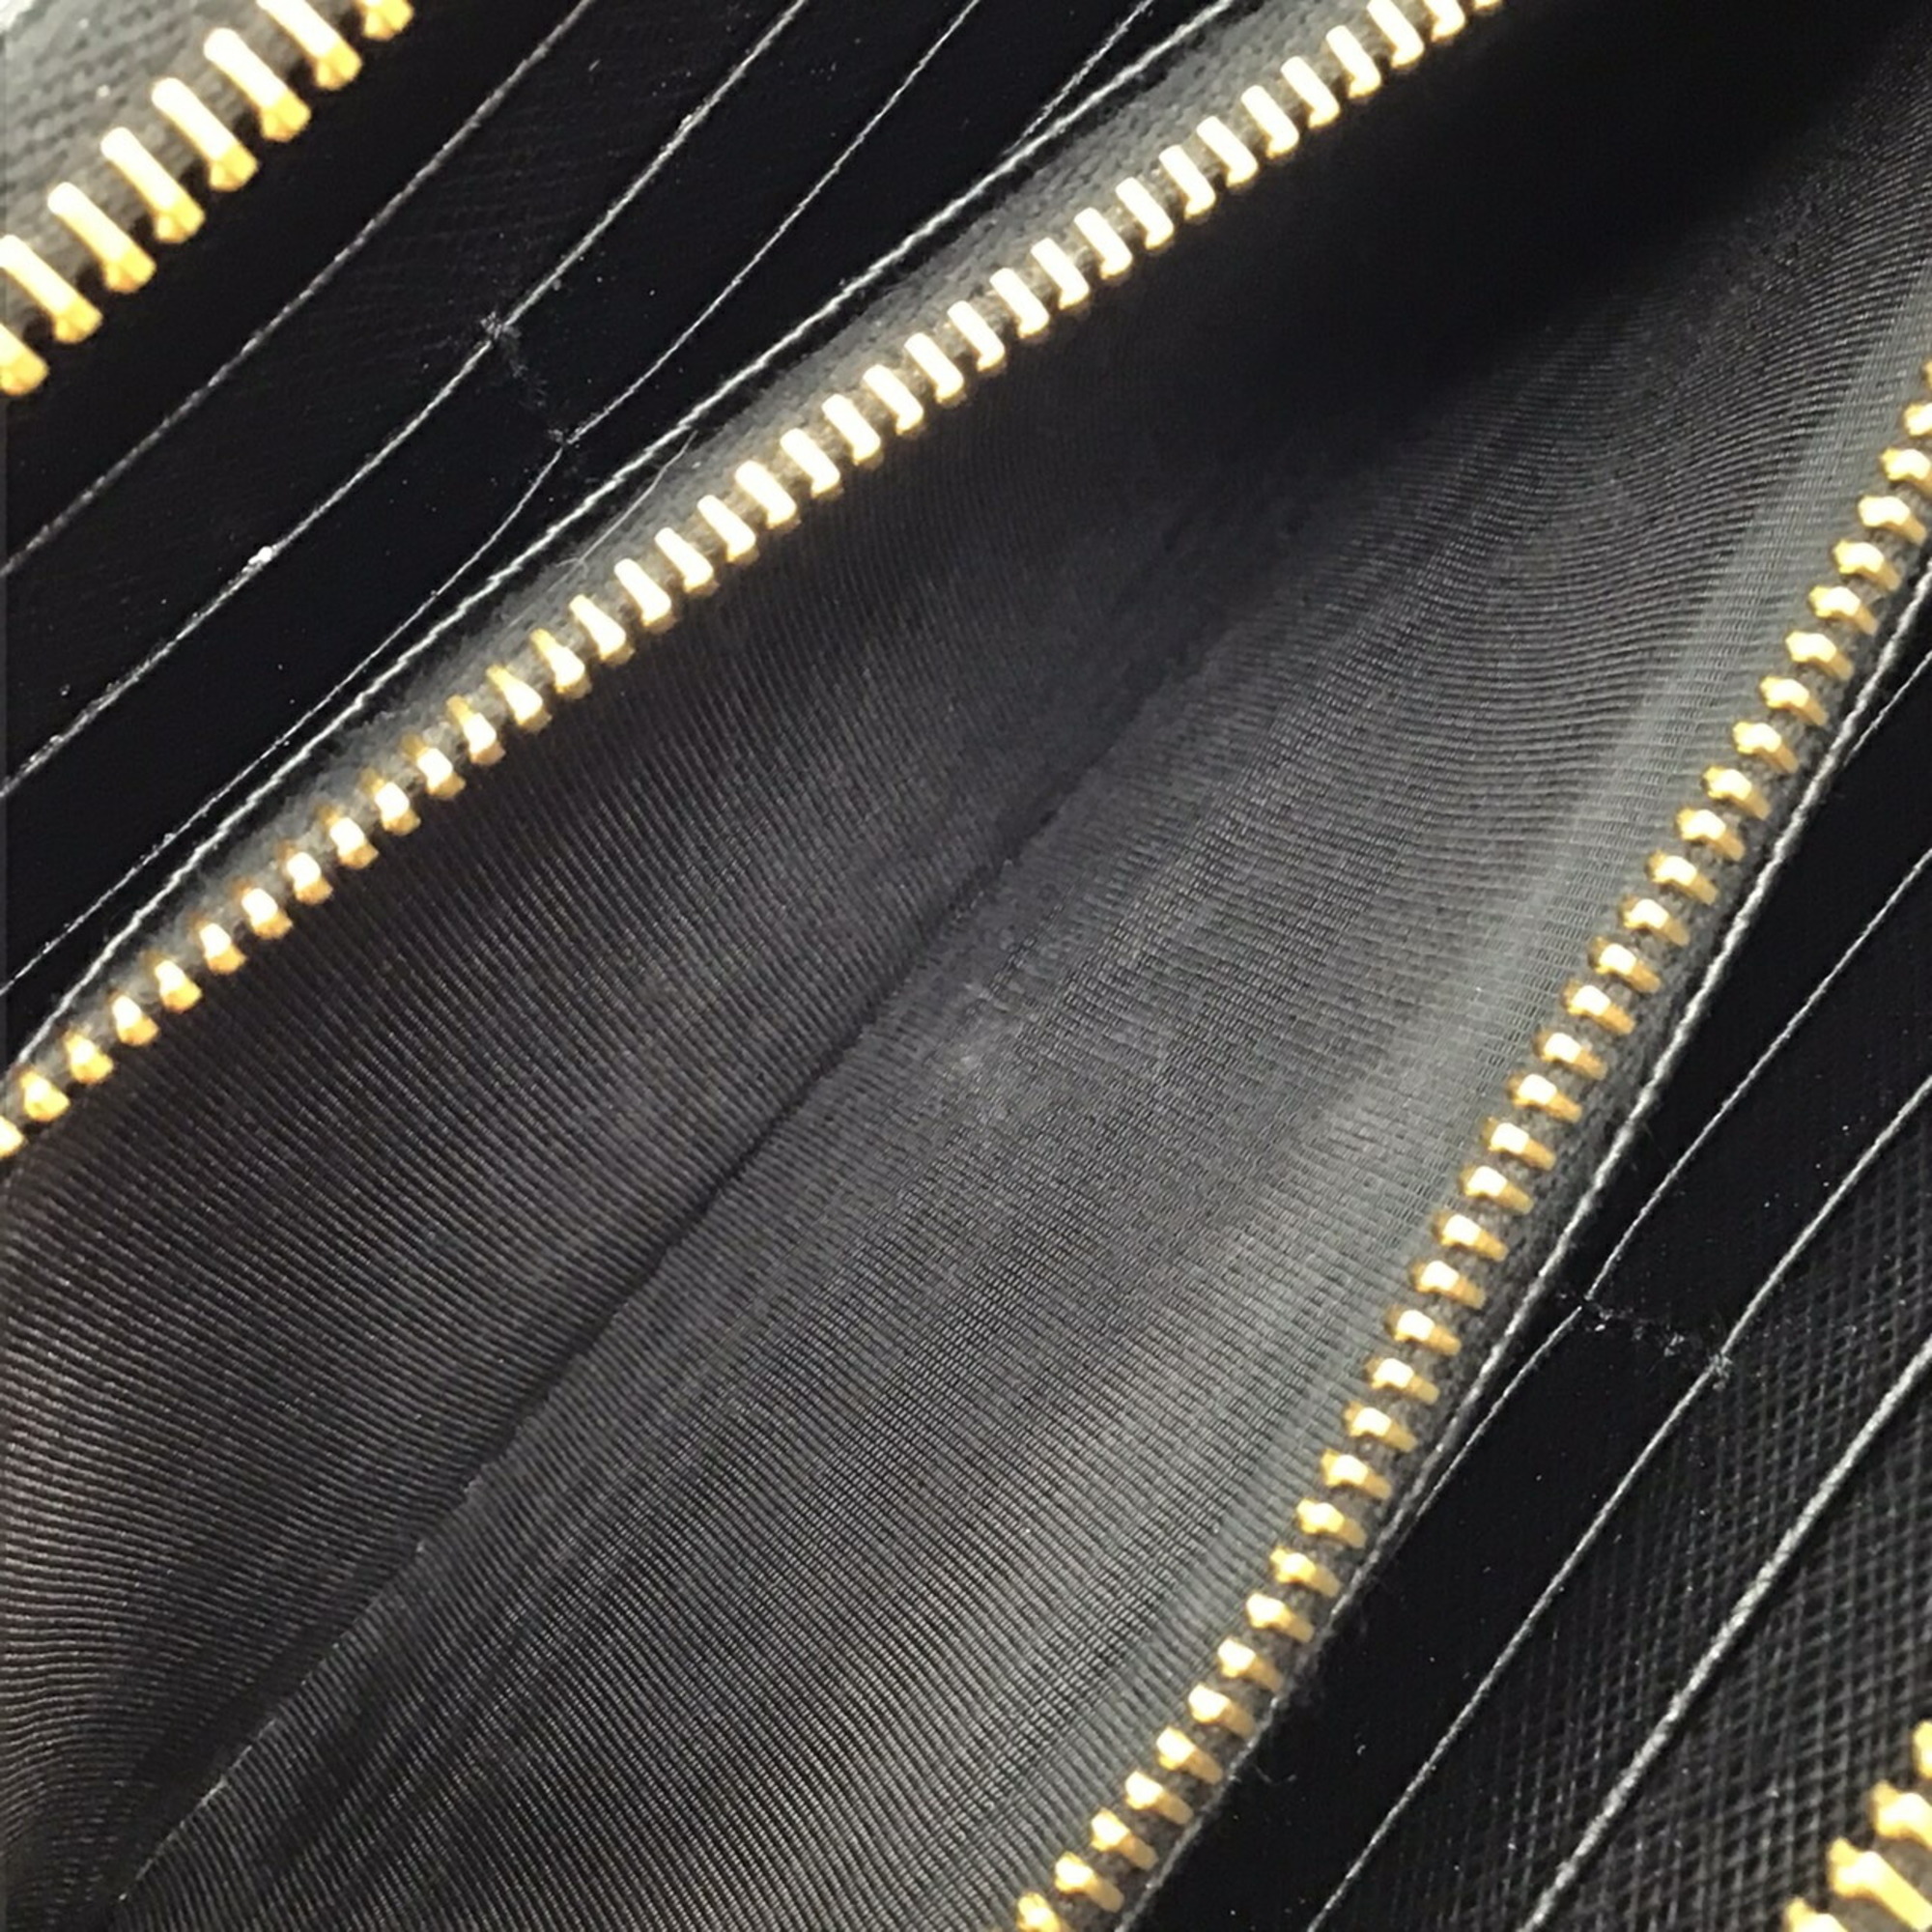 PRADA Prada Saffiano Round Zippy Wallet 1ML506 Long Black Gold Zip Leather Goods Women Men